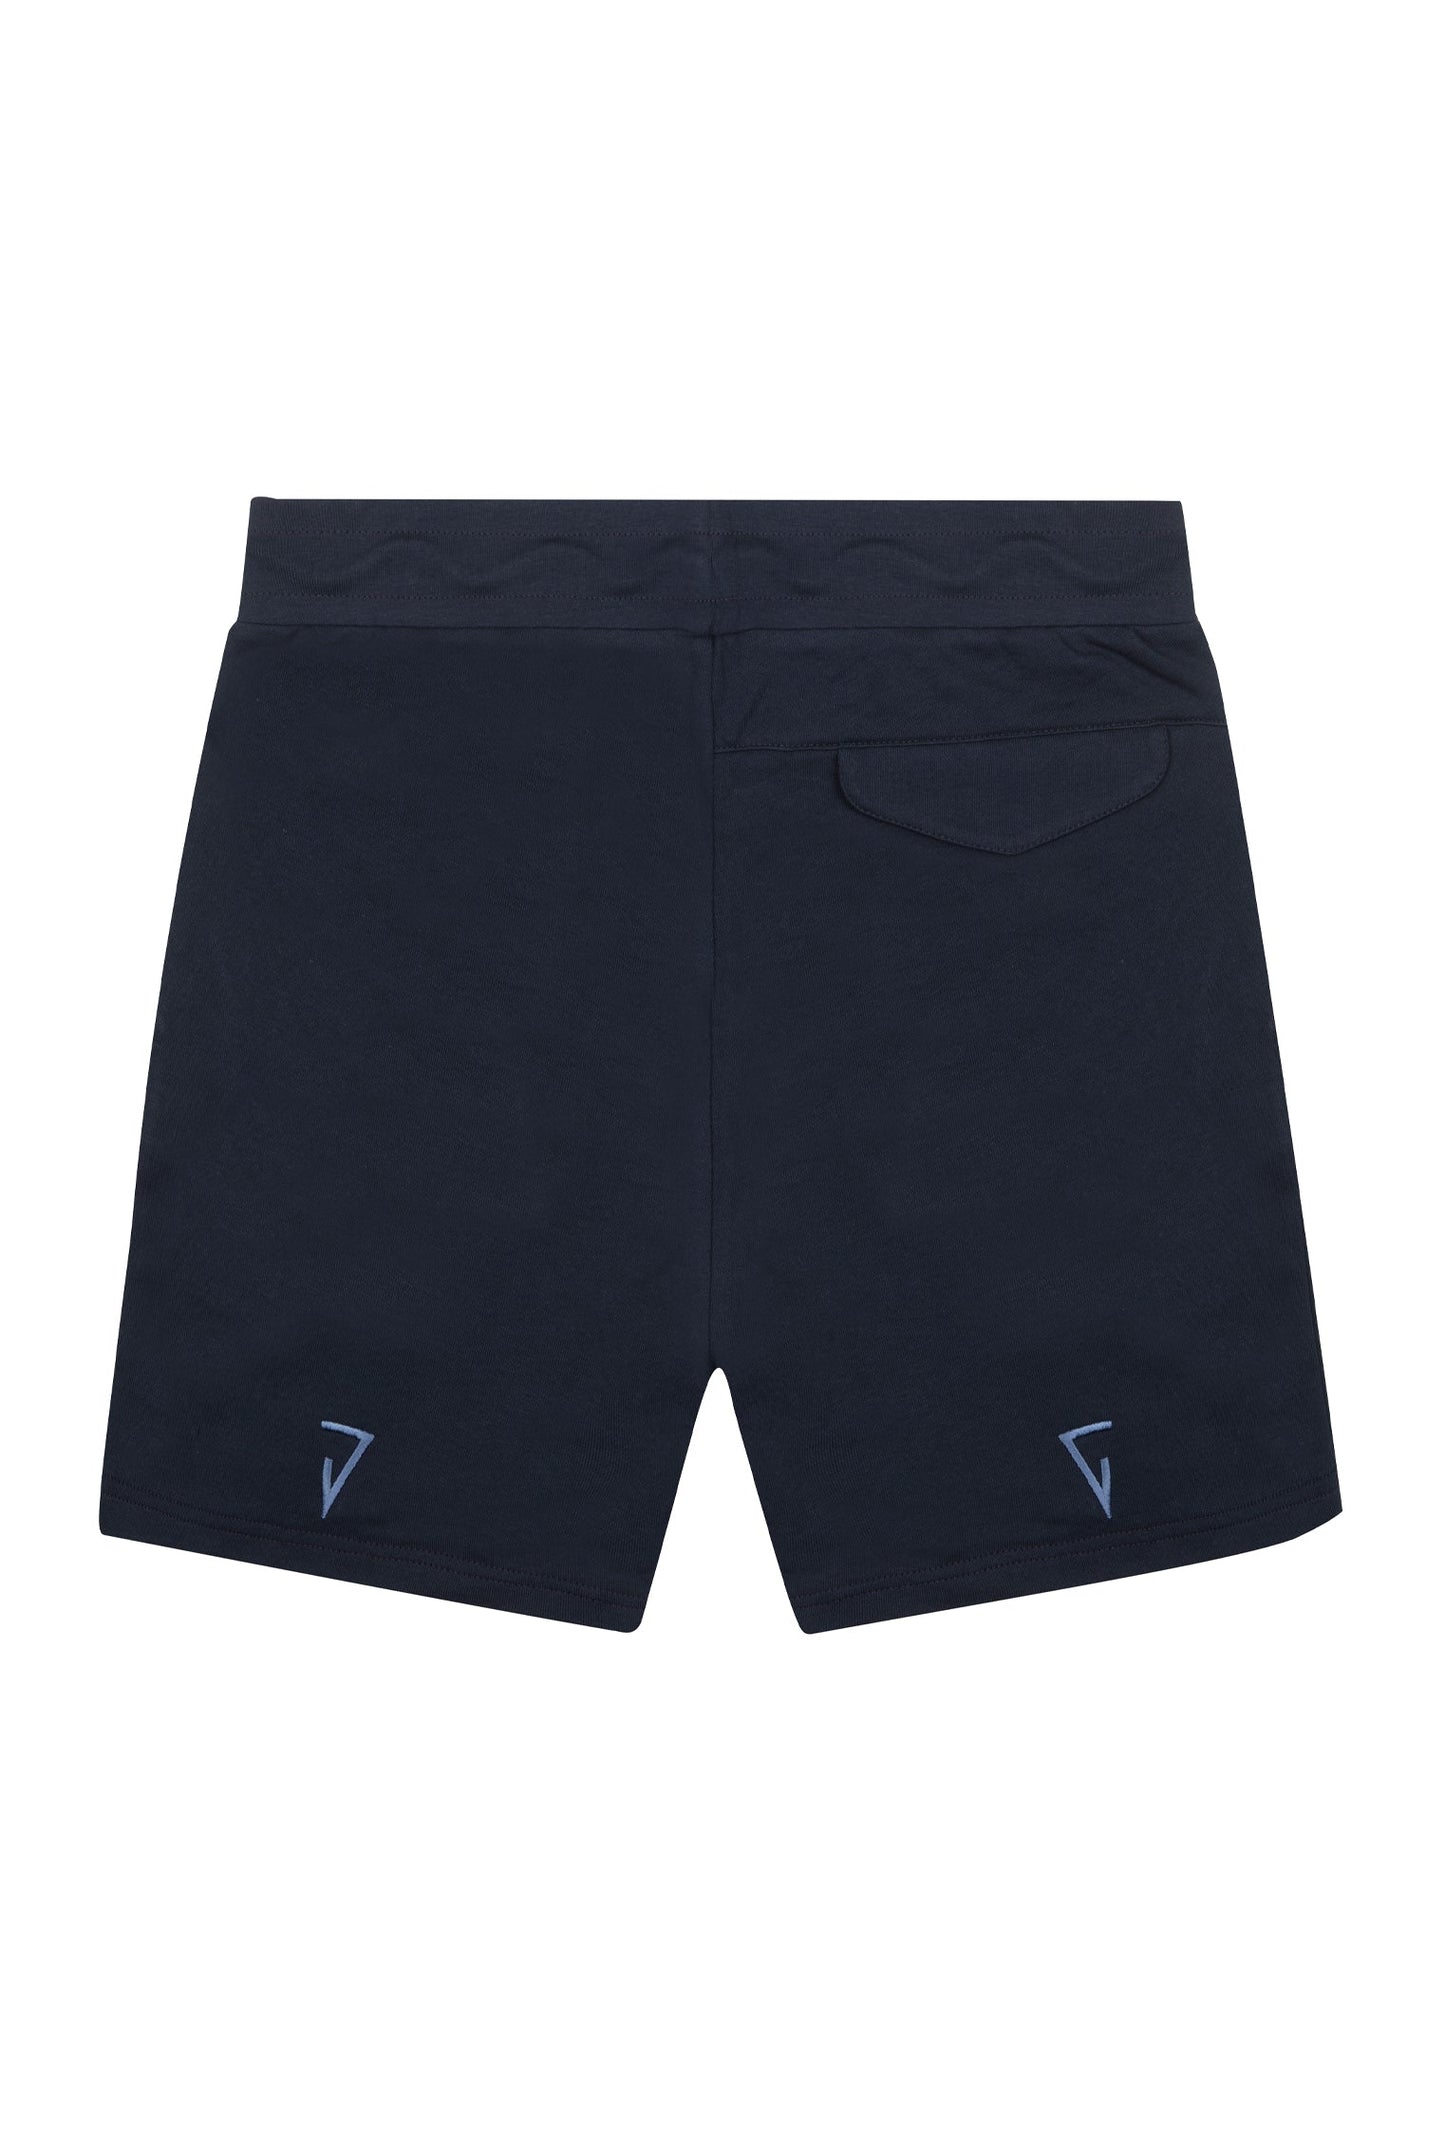 Classic Cotton Shorts- Navy